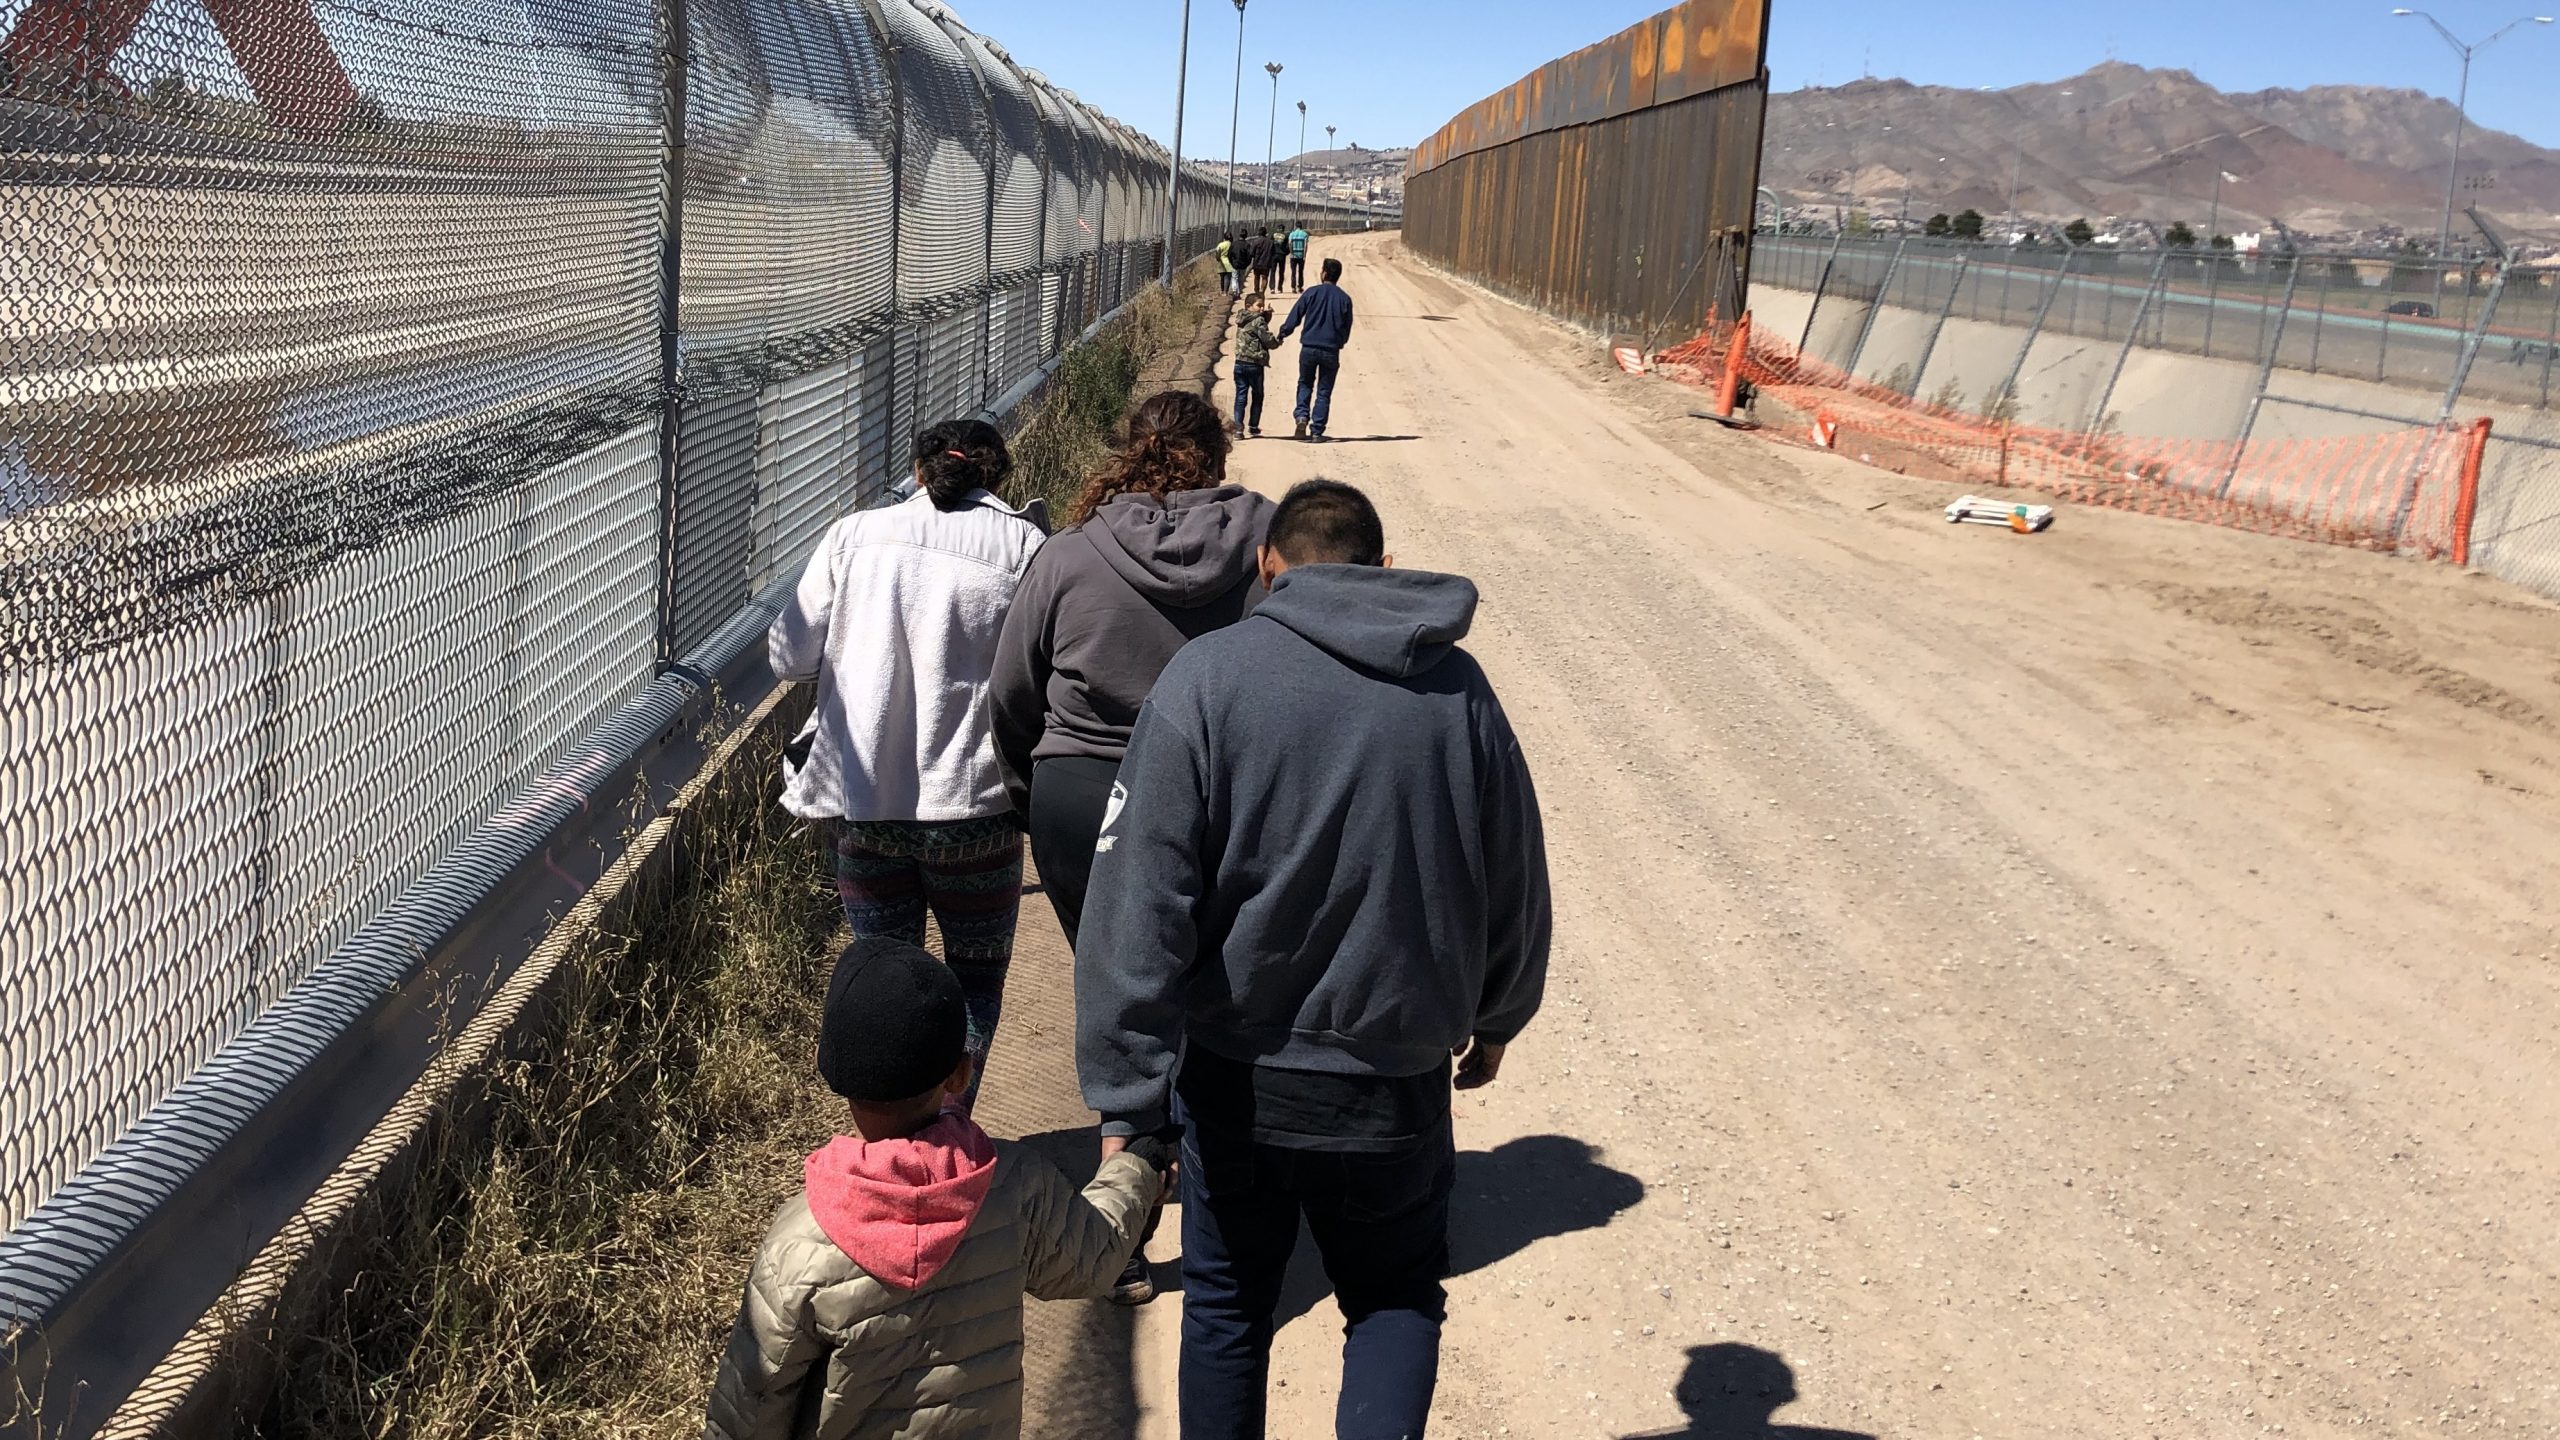 El Paso entryway of choice for Turkish migrants: report 2